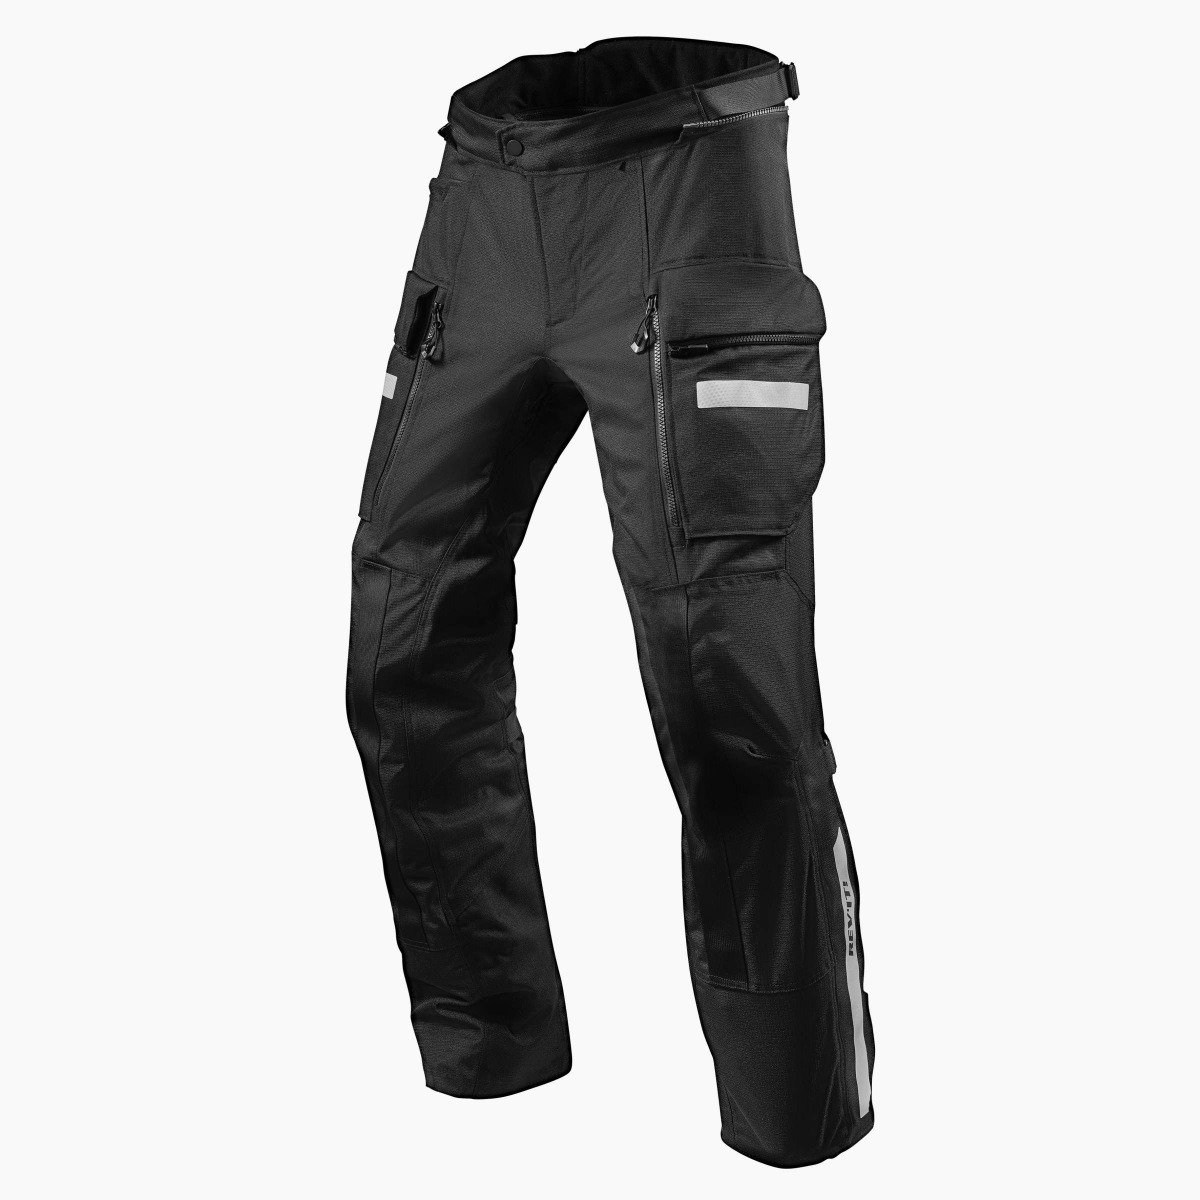 Image of REV'IT! Sand 4 H2O Standard Noir Pantalon Taille 3XL